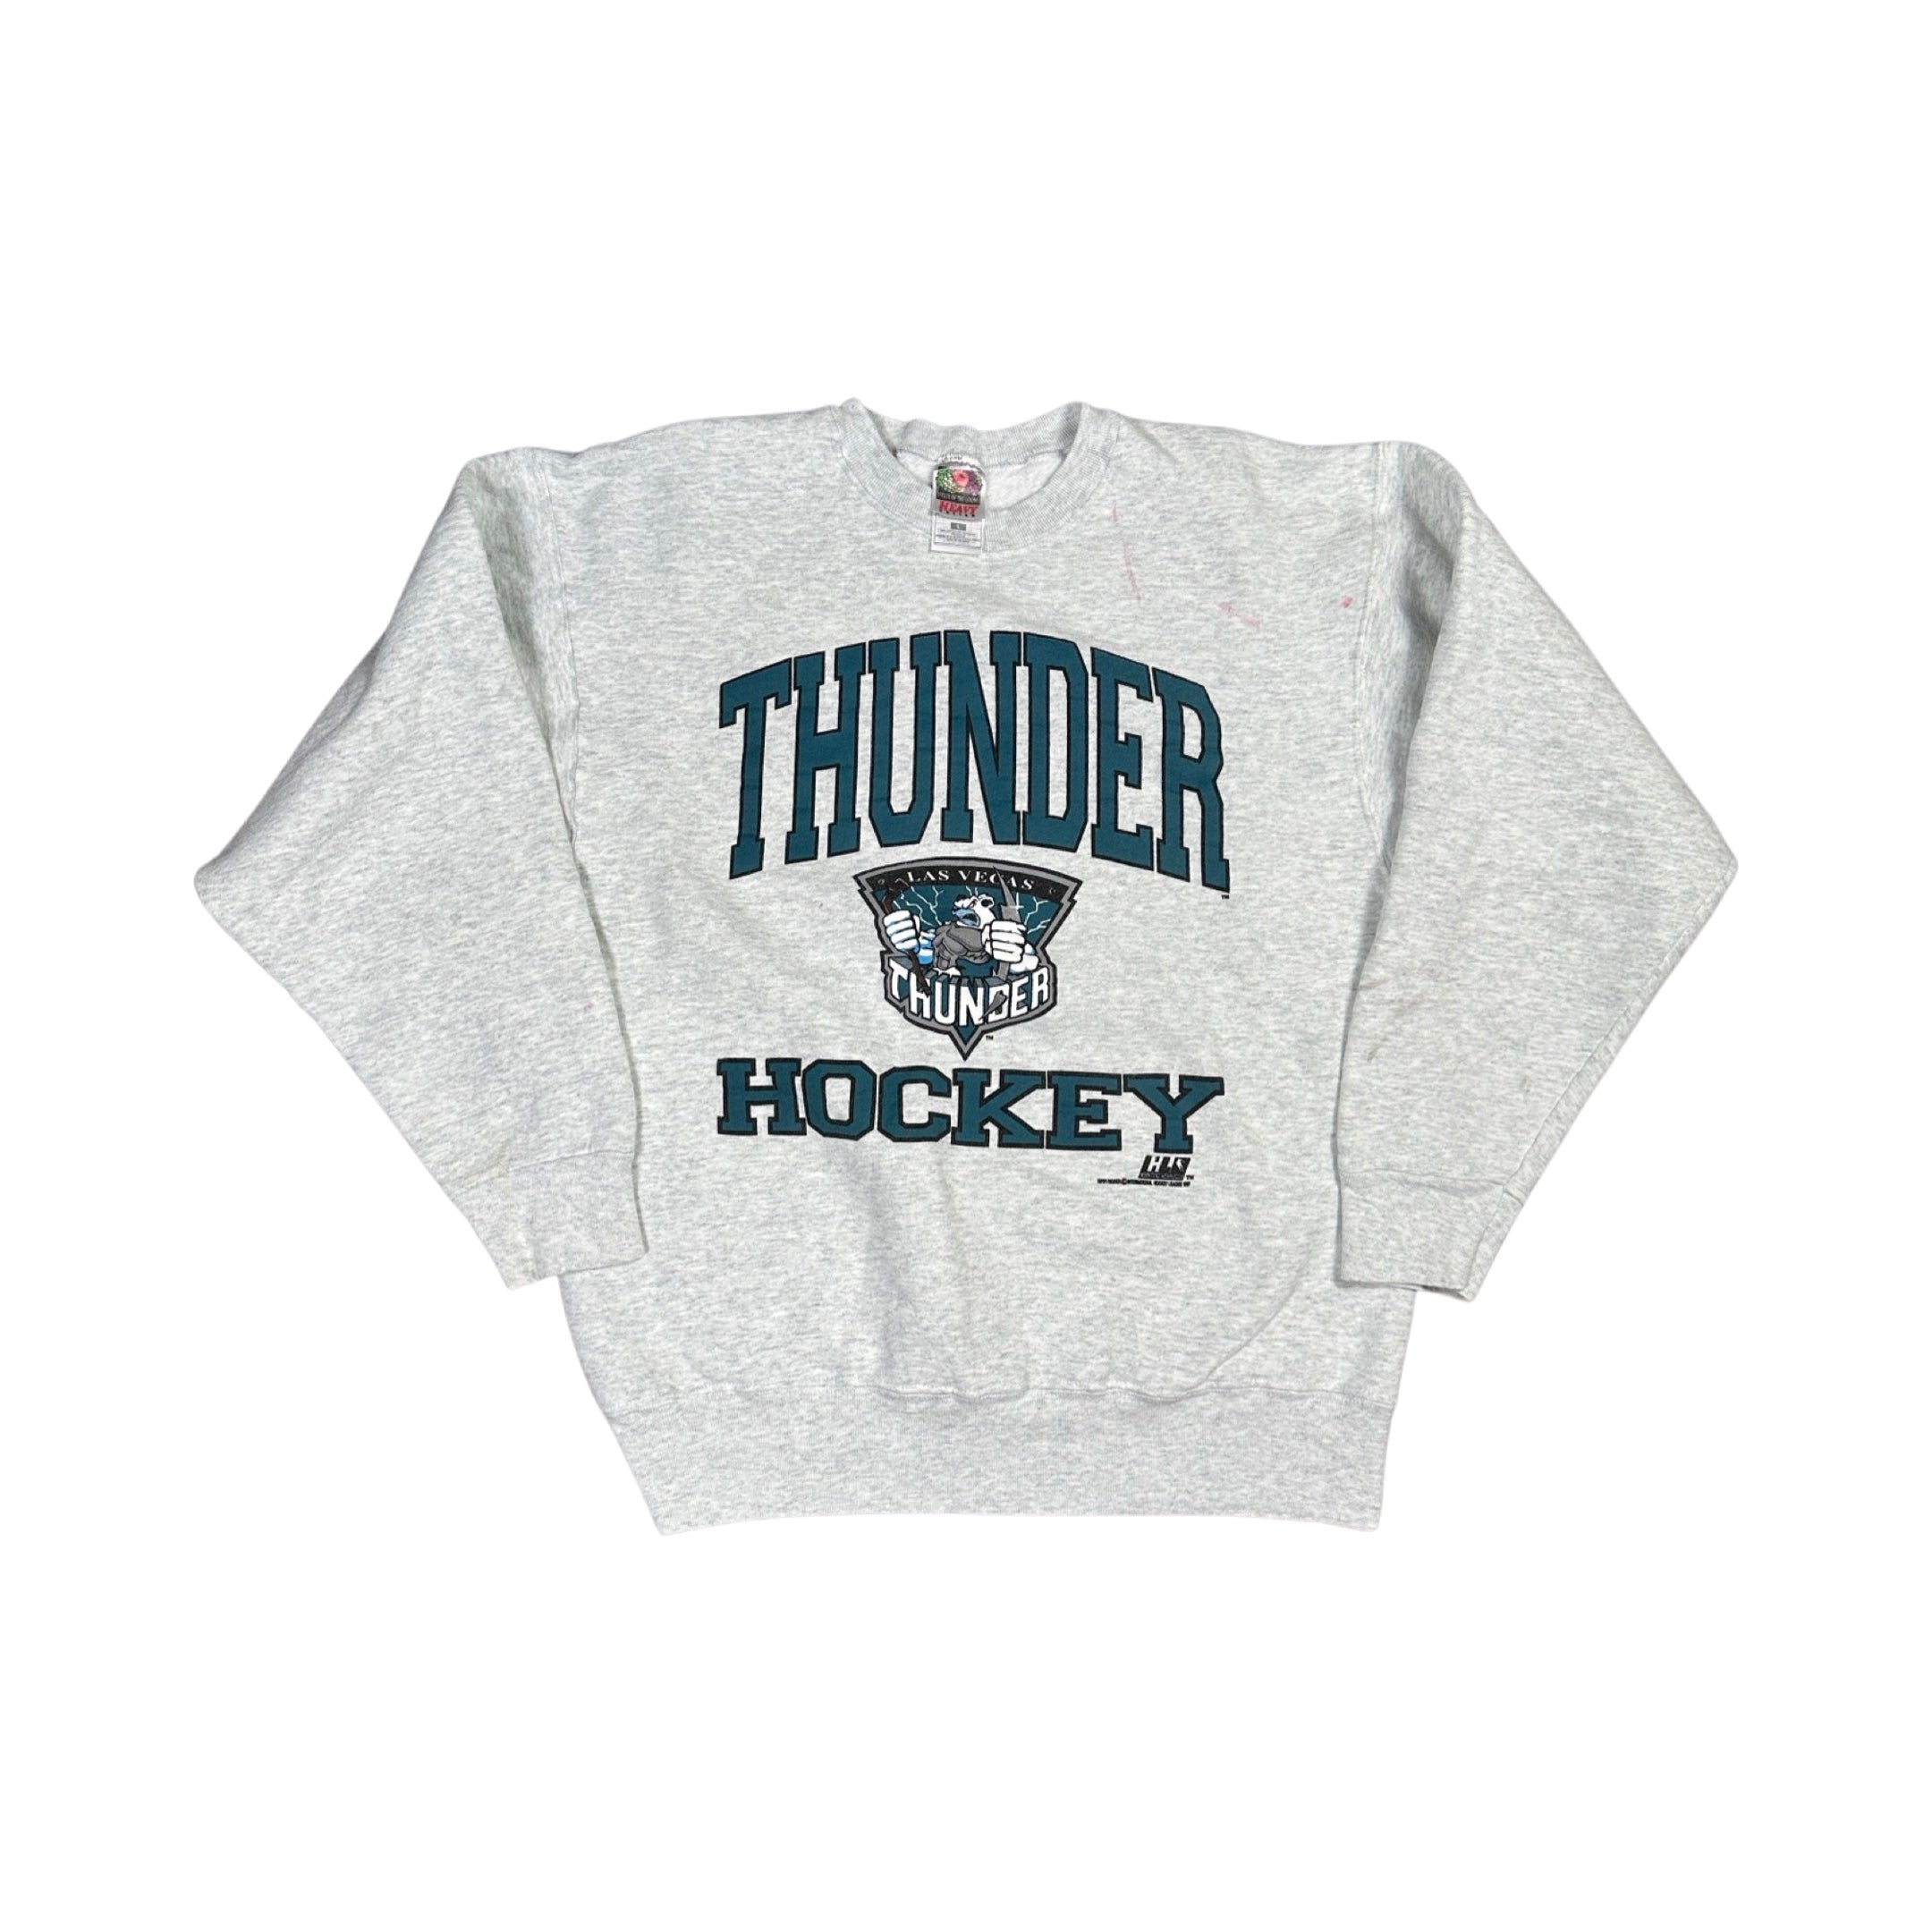 Las Vegas Thunder Hockey 1997 Sweater (Medium)